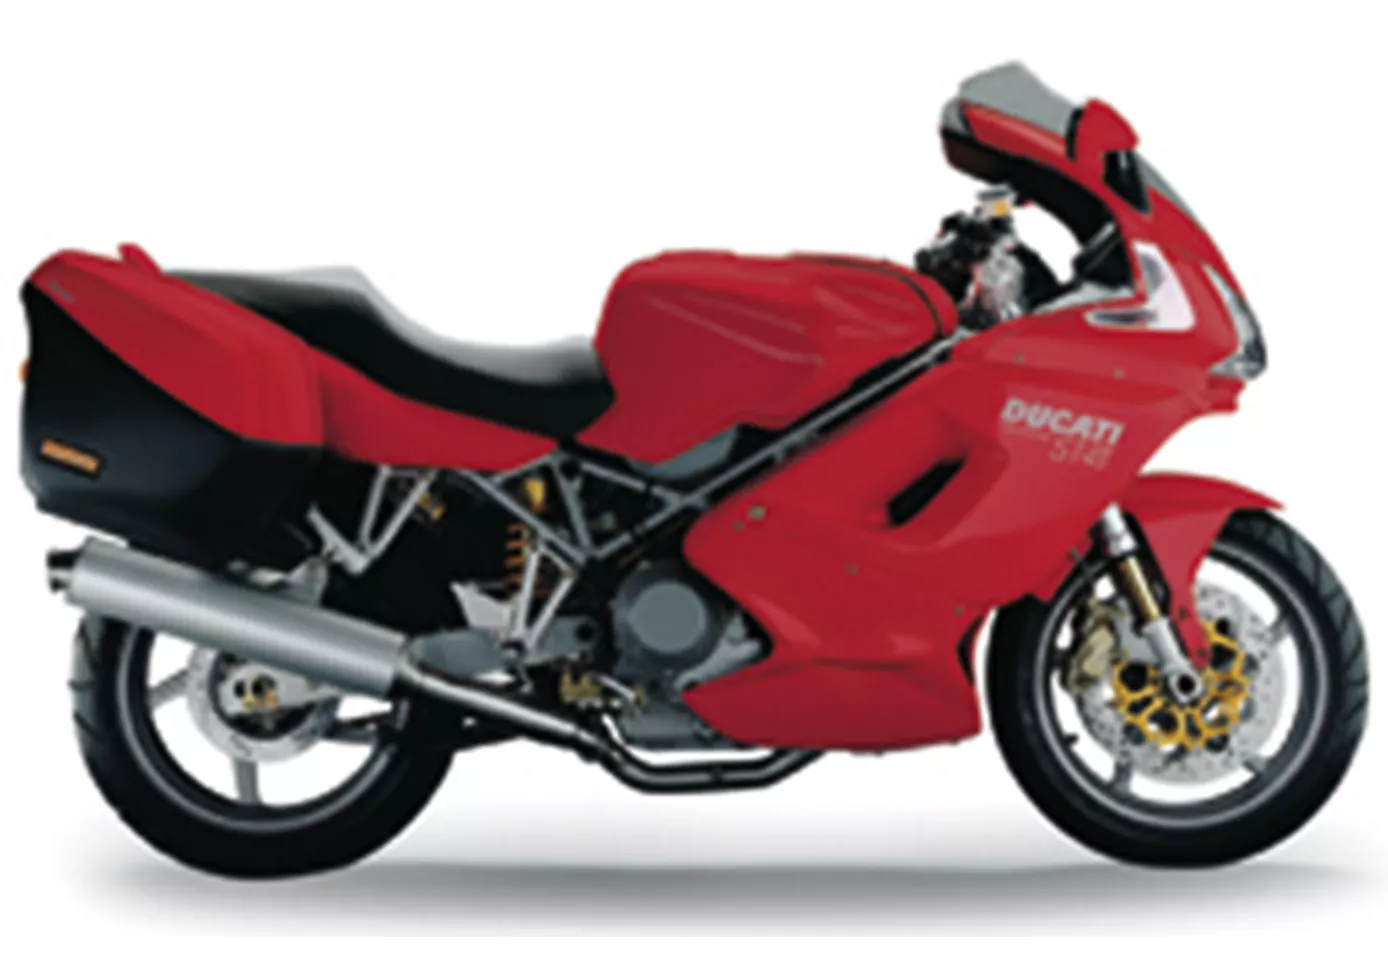 Ducati ST 4 S 2005